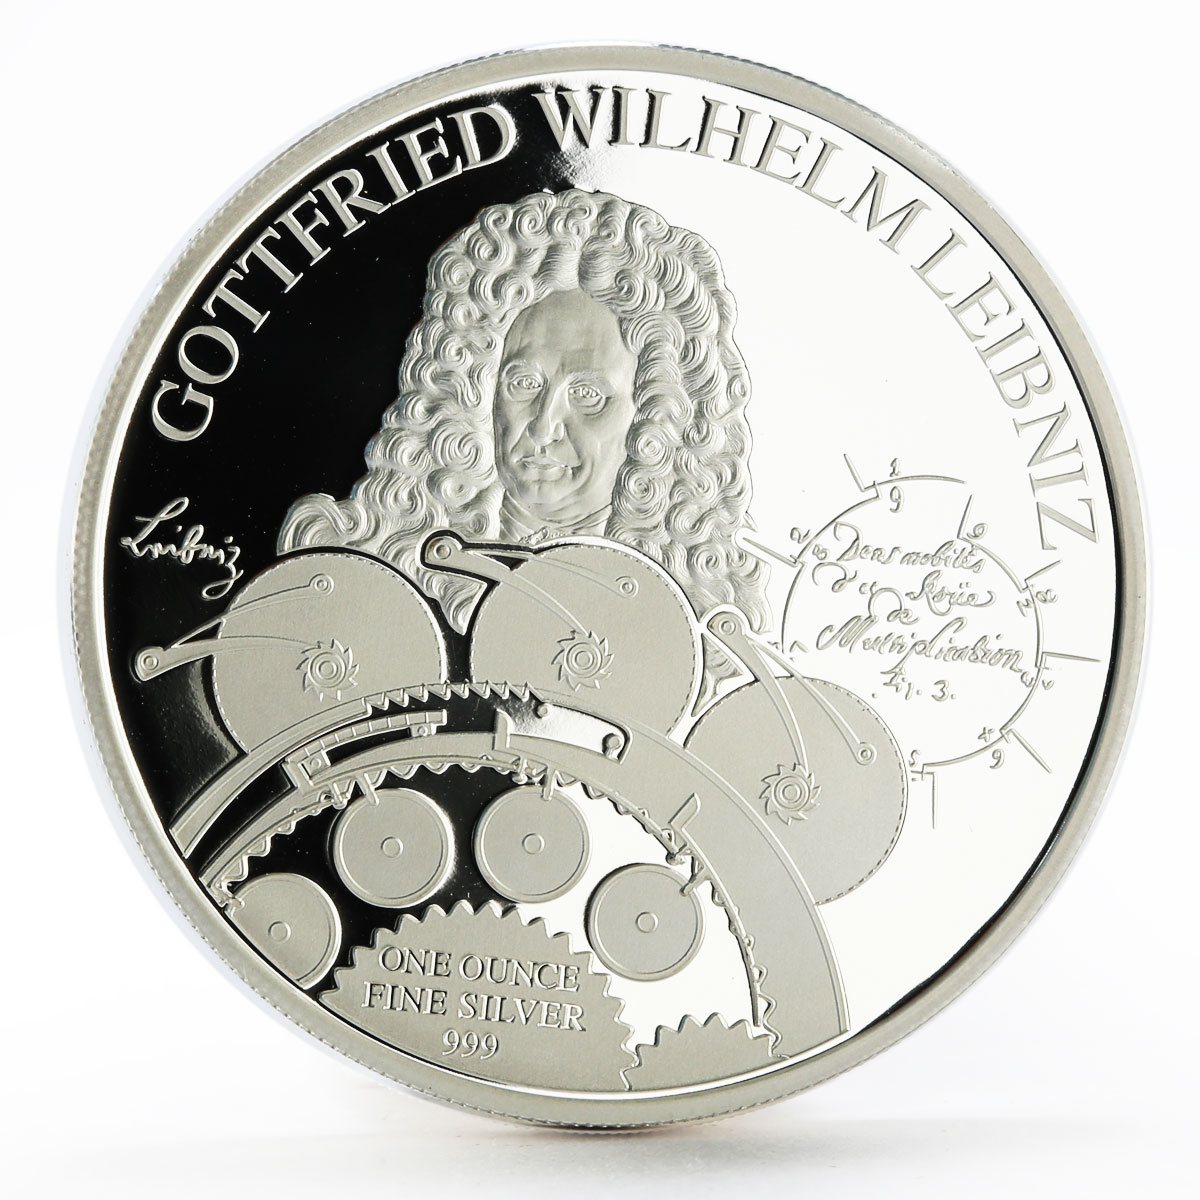 Samoa 5 dollars Gottfried Wilhelm Leibniz German Polymath proof silver coin 2016